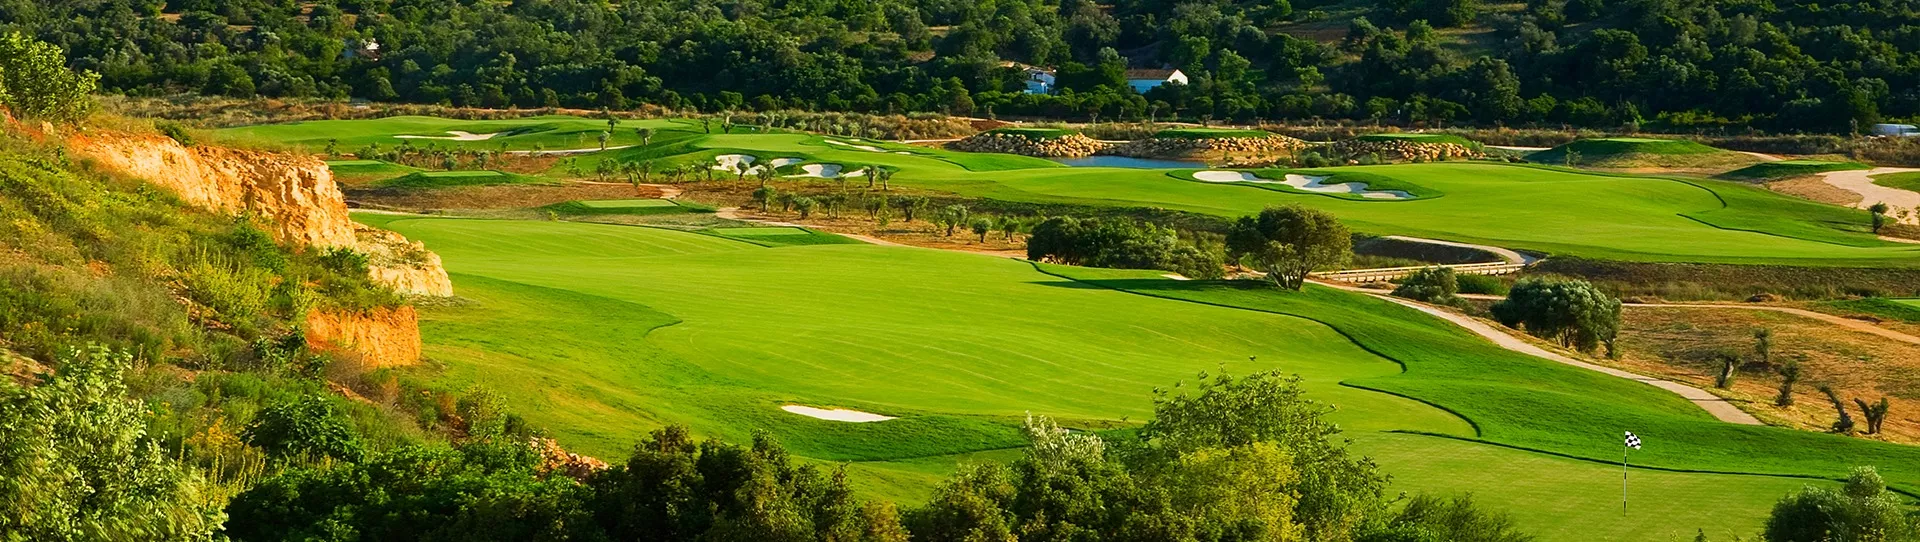 Portugal Golf Driving Range - Amendoeira Academy & Driving Range - Photo 1